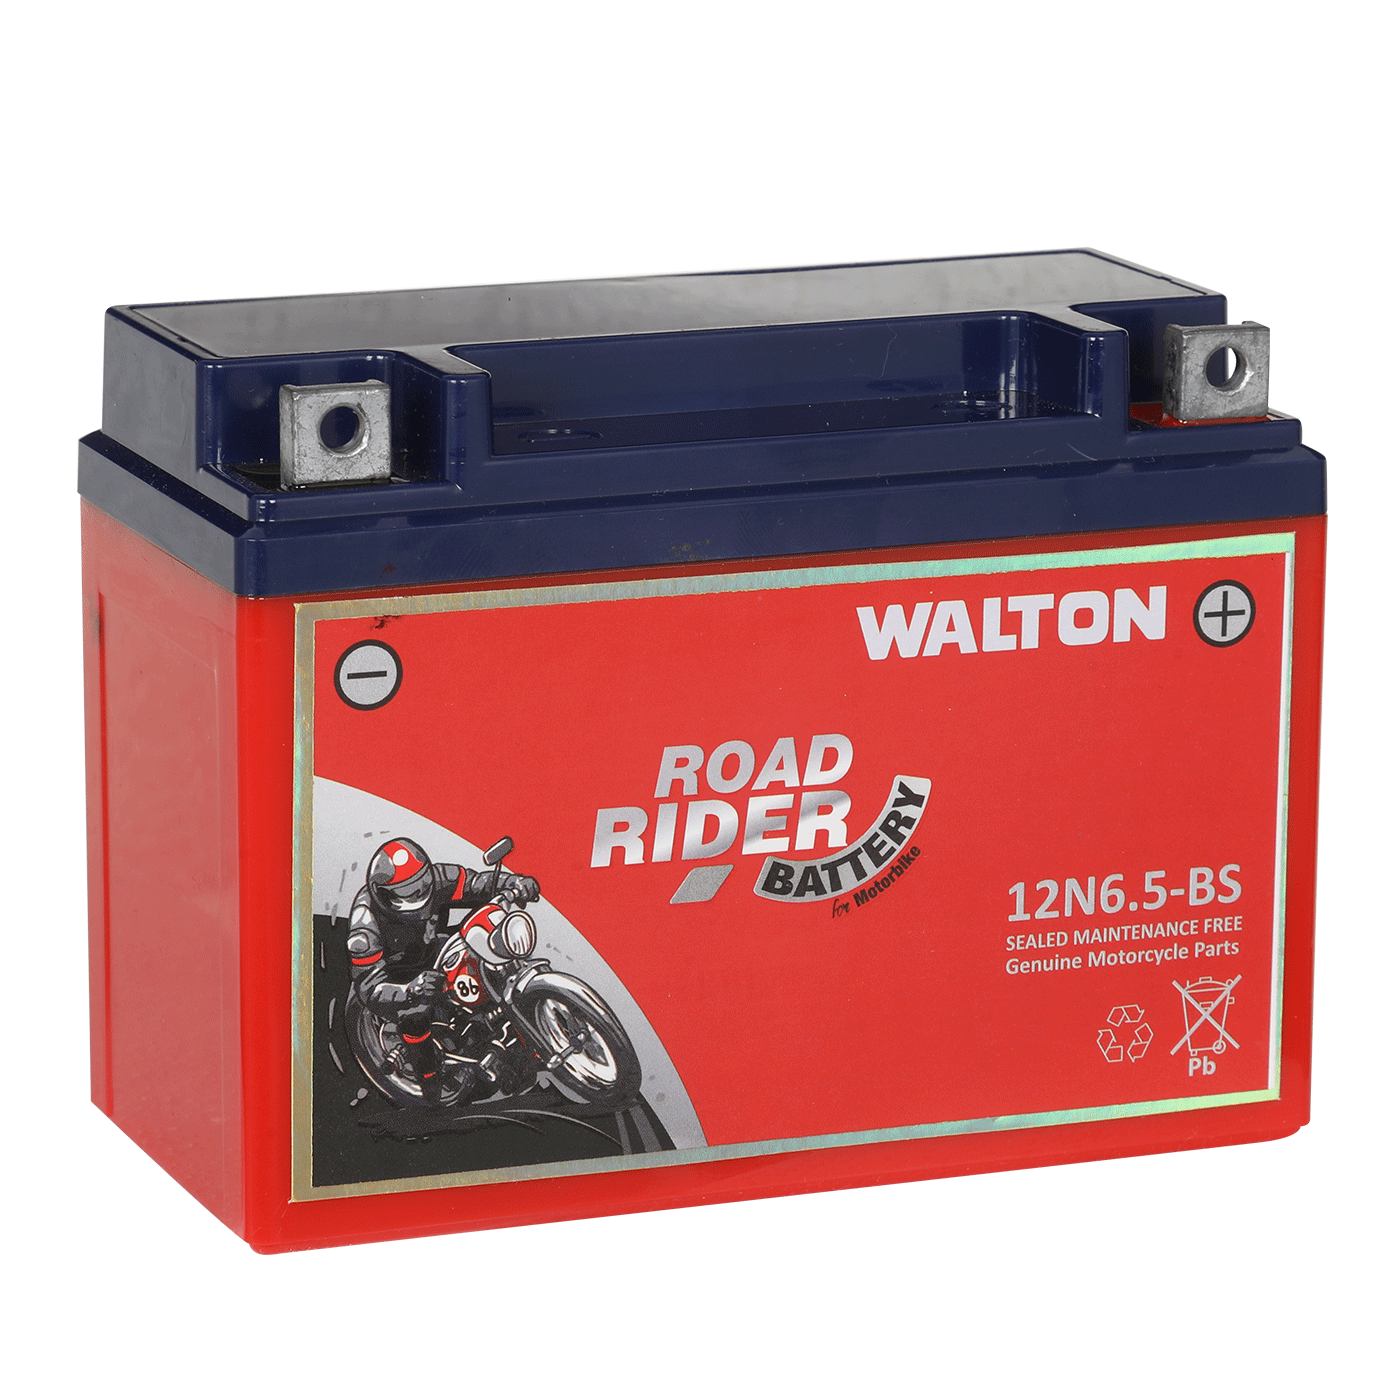 Road Rider 12N6.5-BS price in Bangladesh